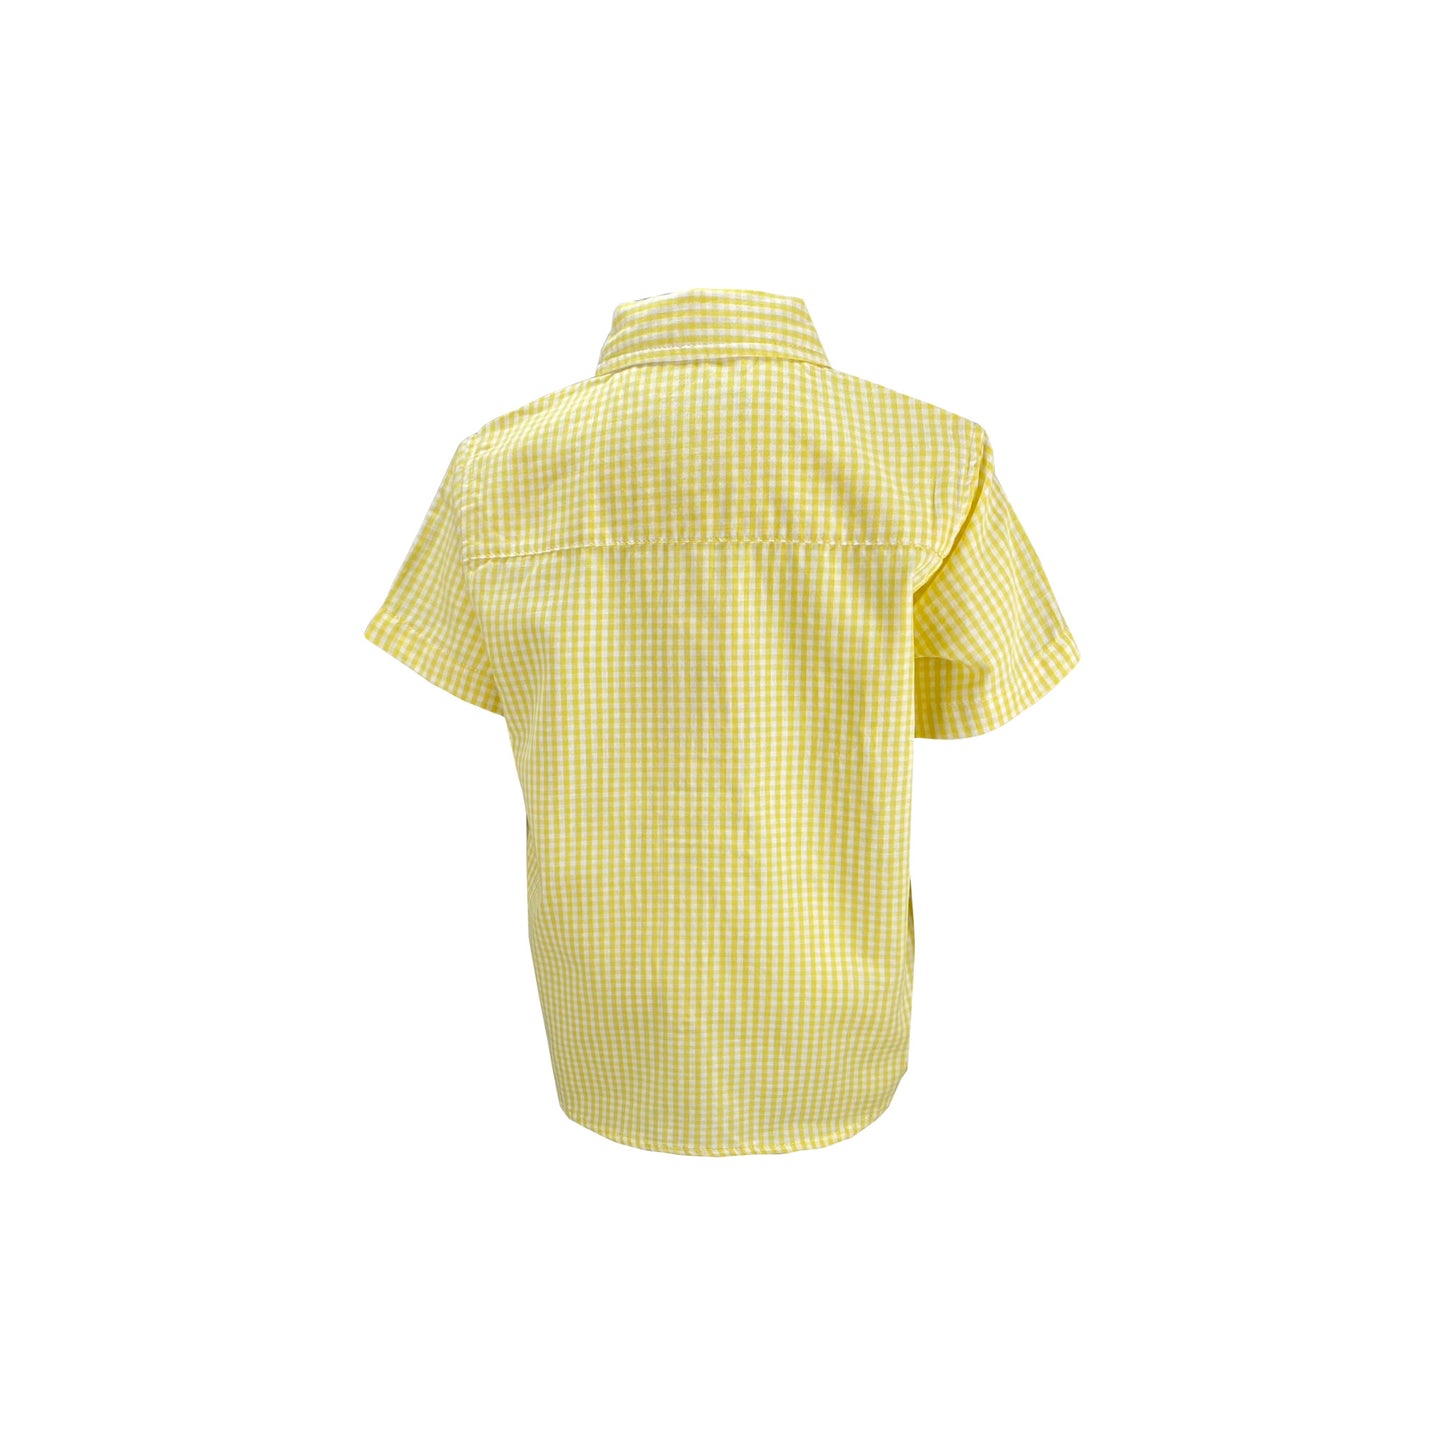 Ishtex ® Yellow Short Sleeve Button Down Shirt